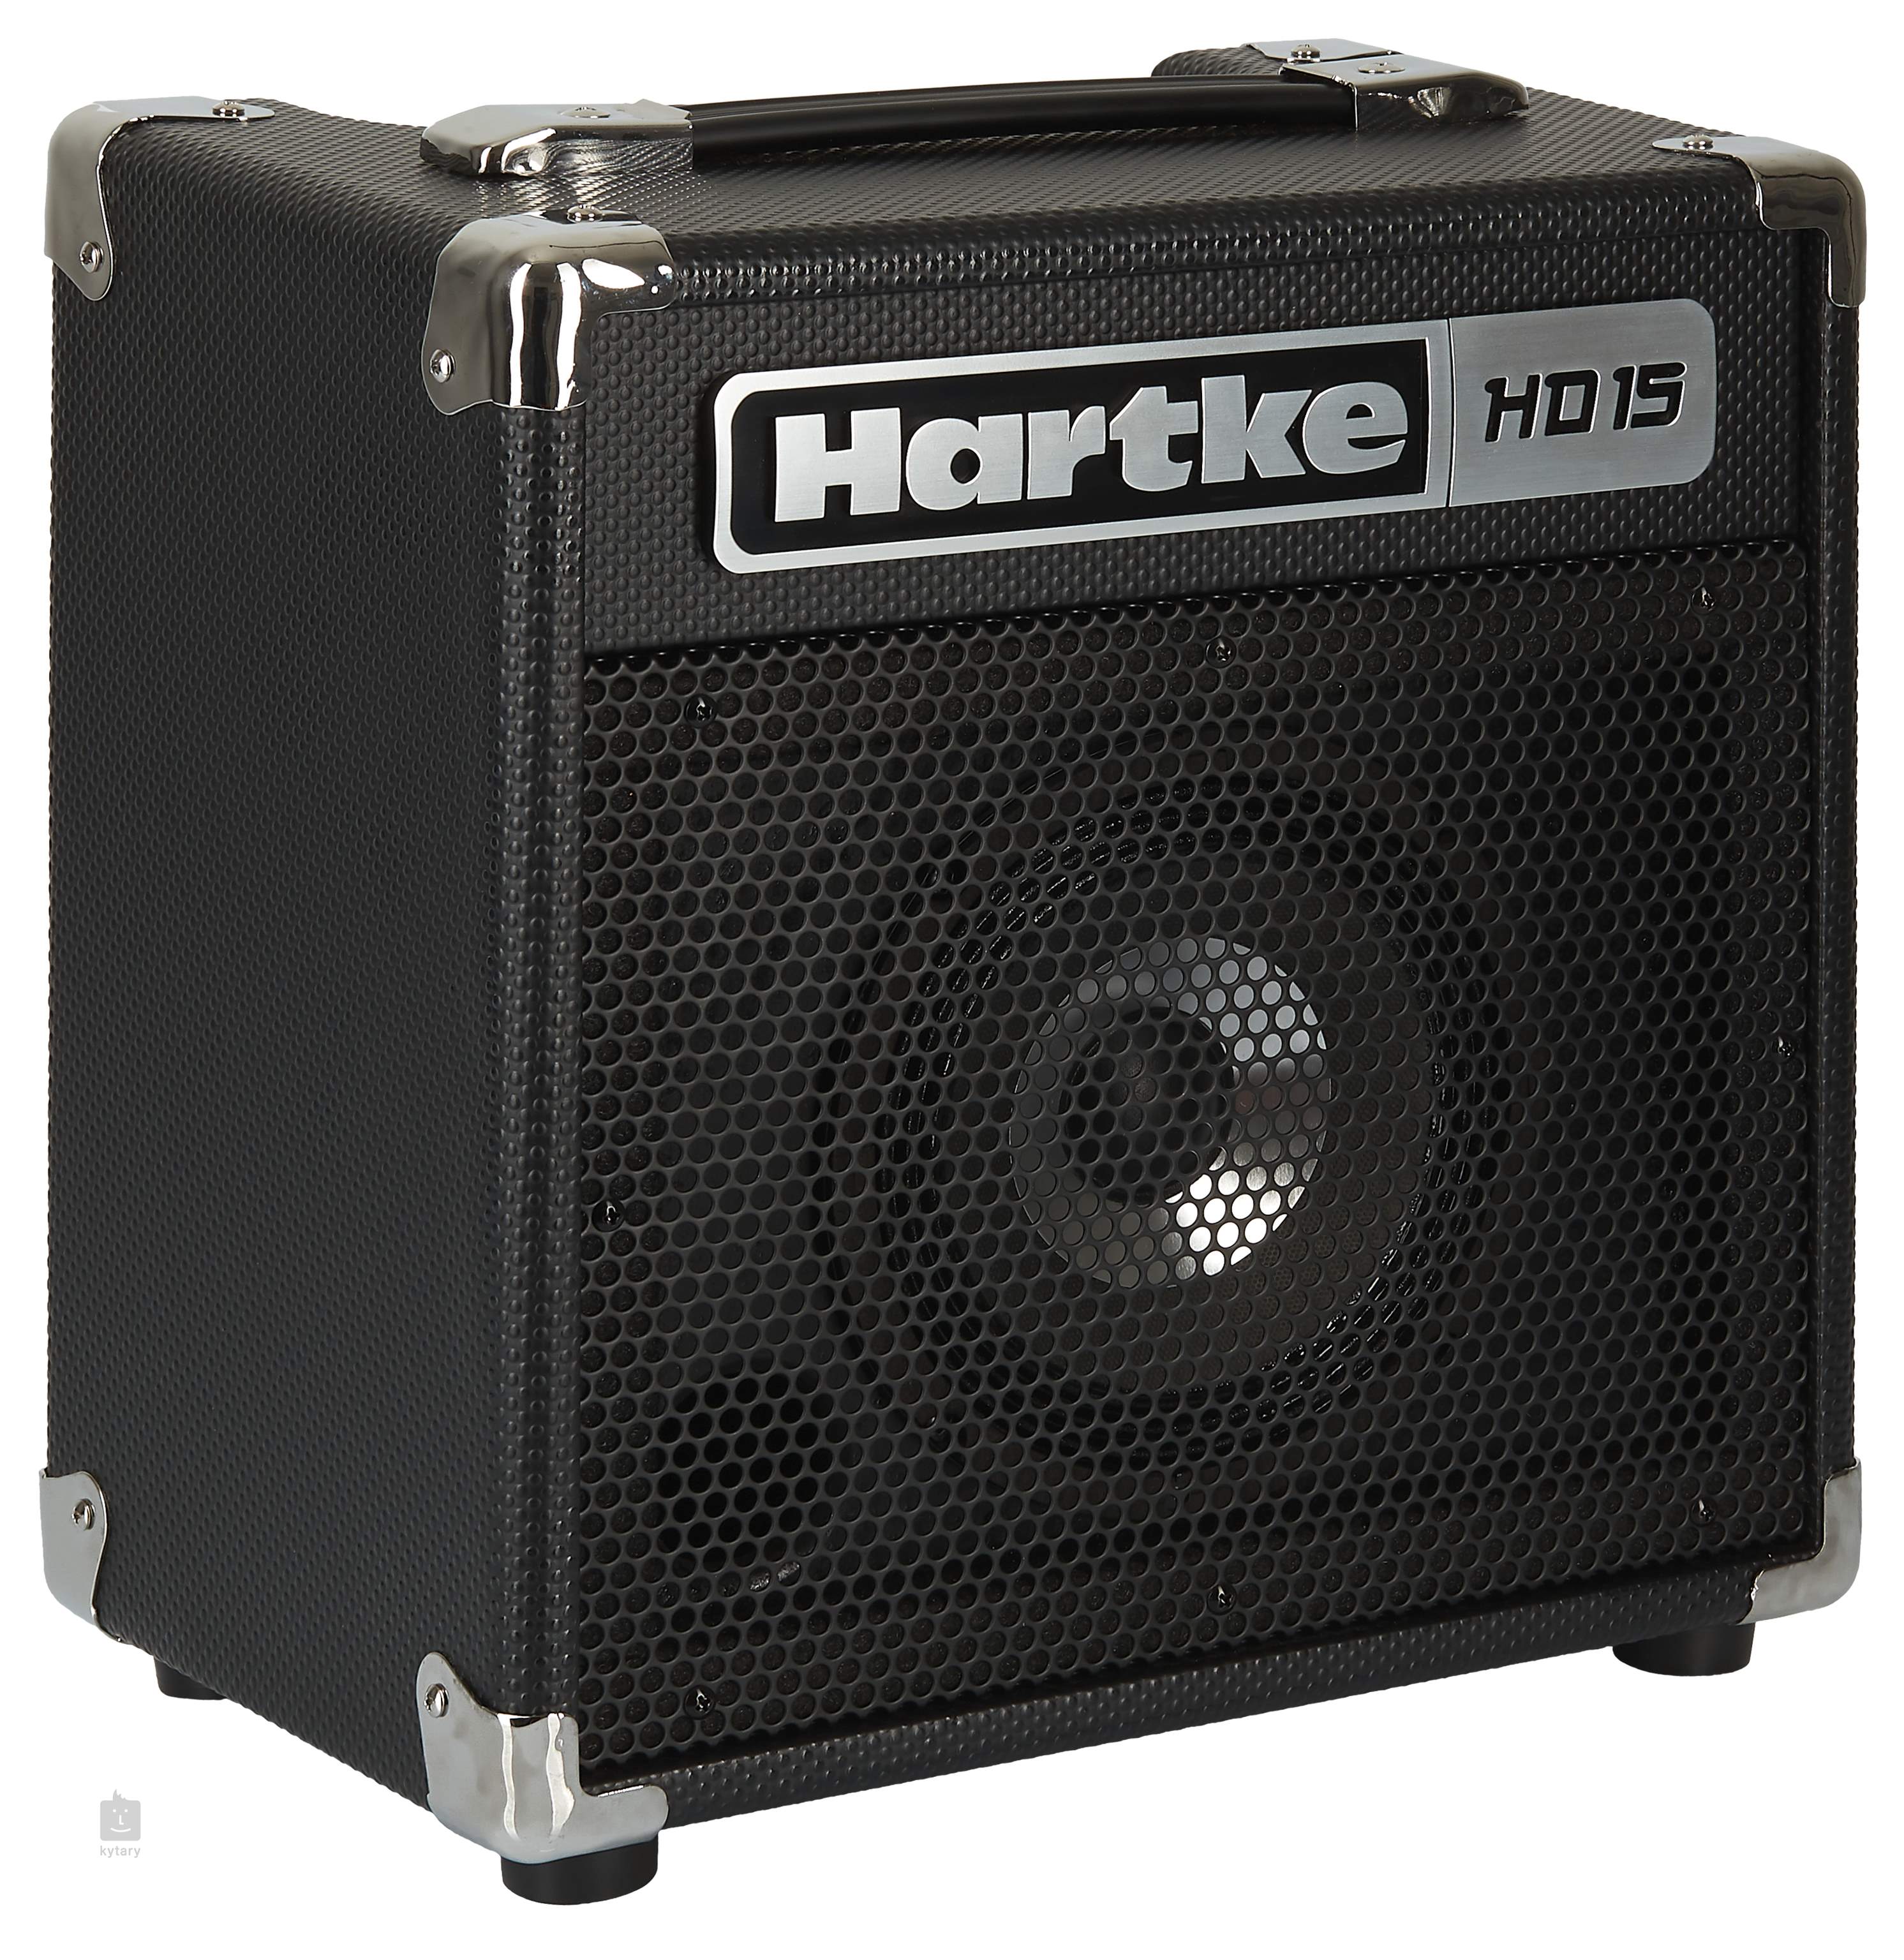 Hartke HD15 Bass Combo Amplifier 